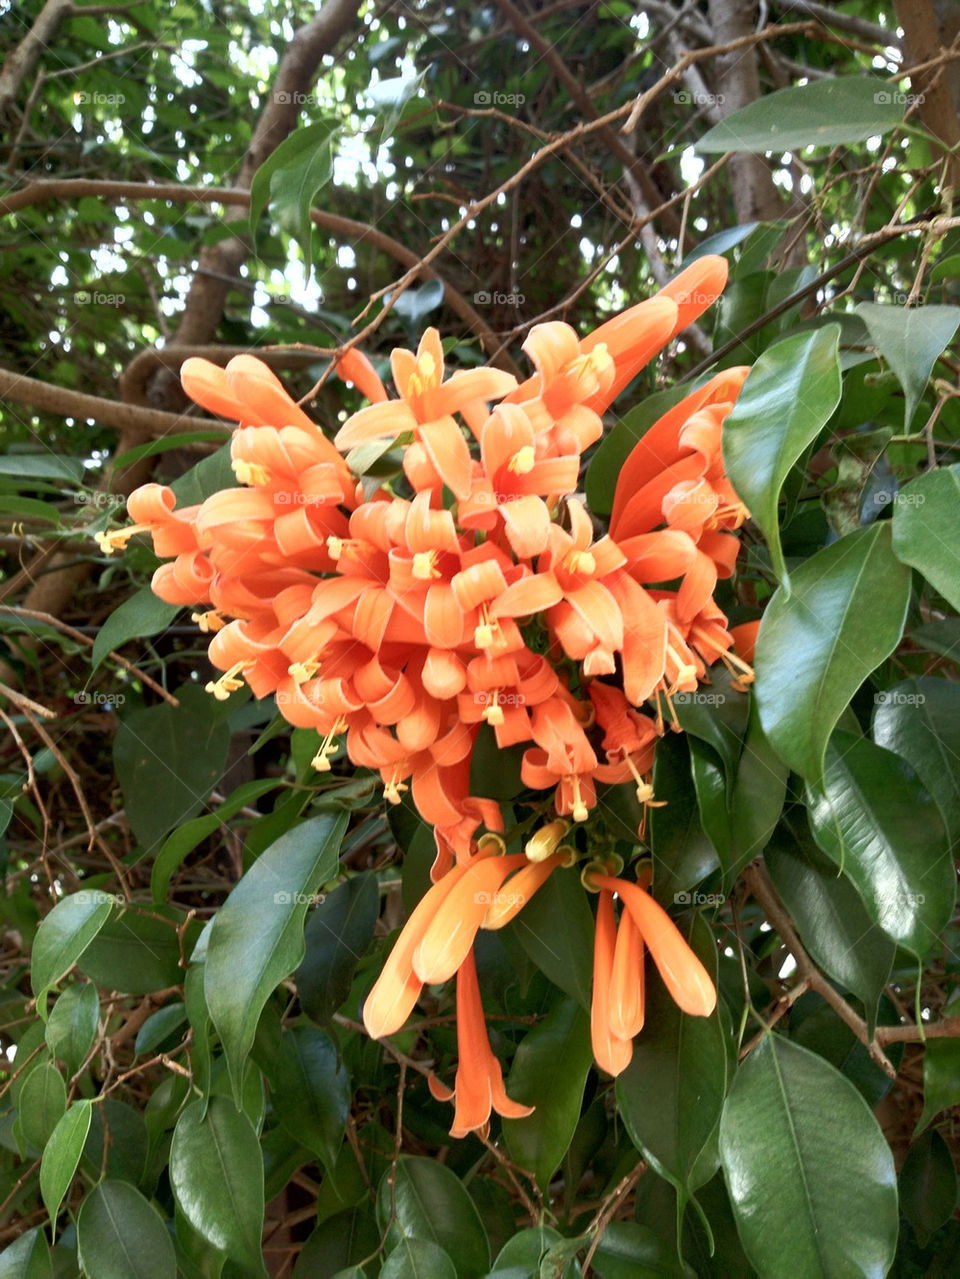 flowers of orange bunch by g5joseph